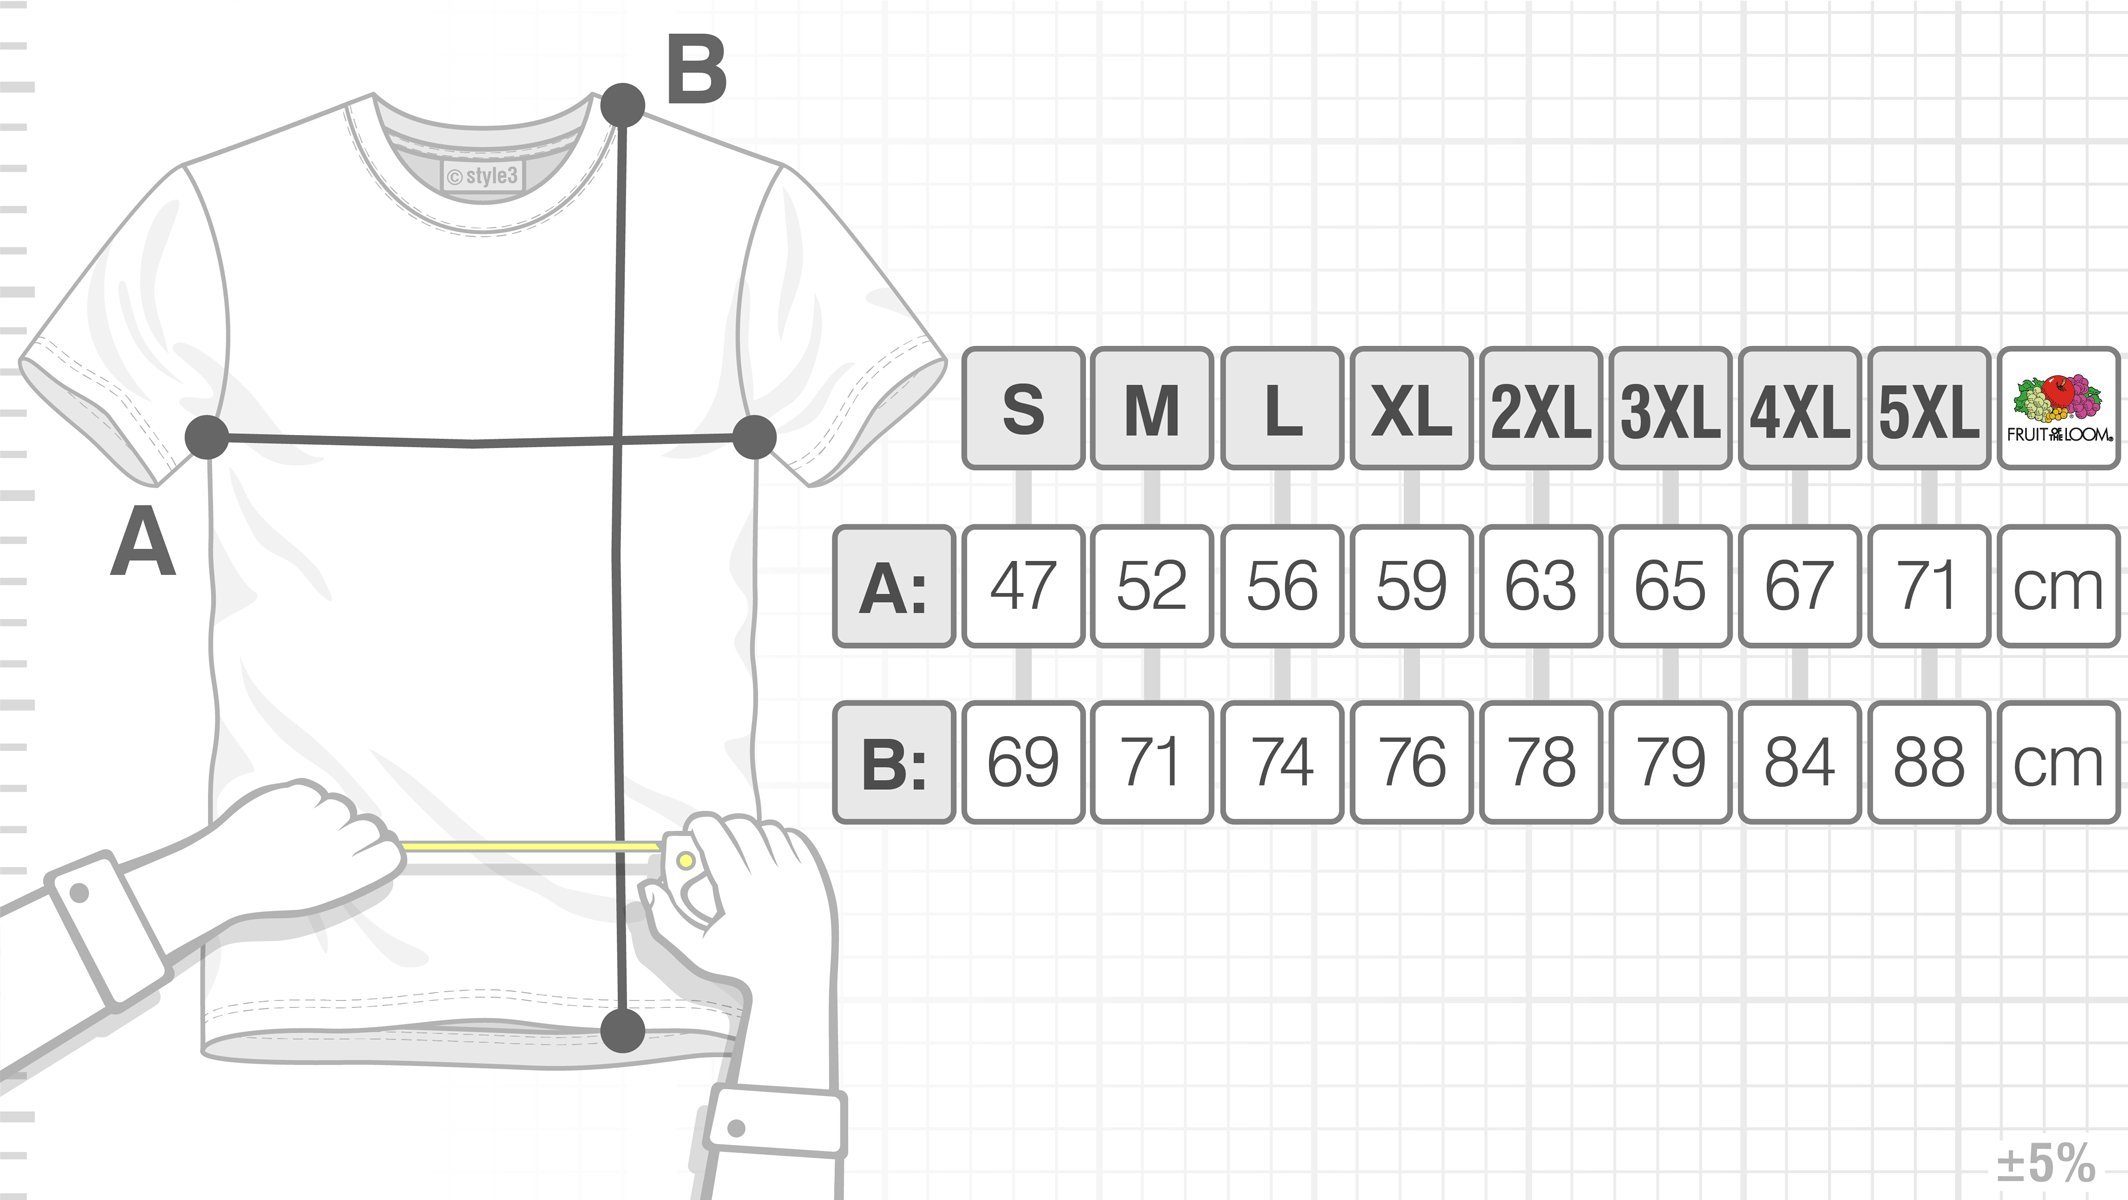 Bang Herren Sheldon grau Big 8-Bit Cooper Penny meliert Pixel style3 Print-Shirt Serie T-Shirt Theory Friends